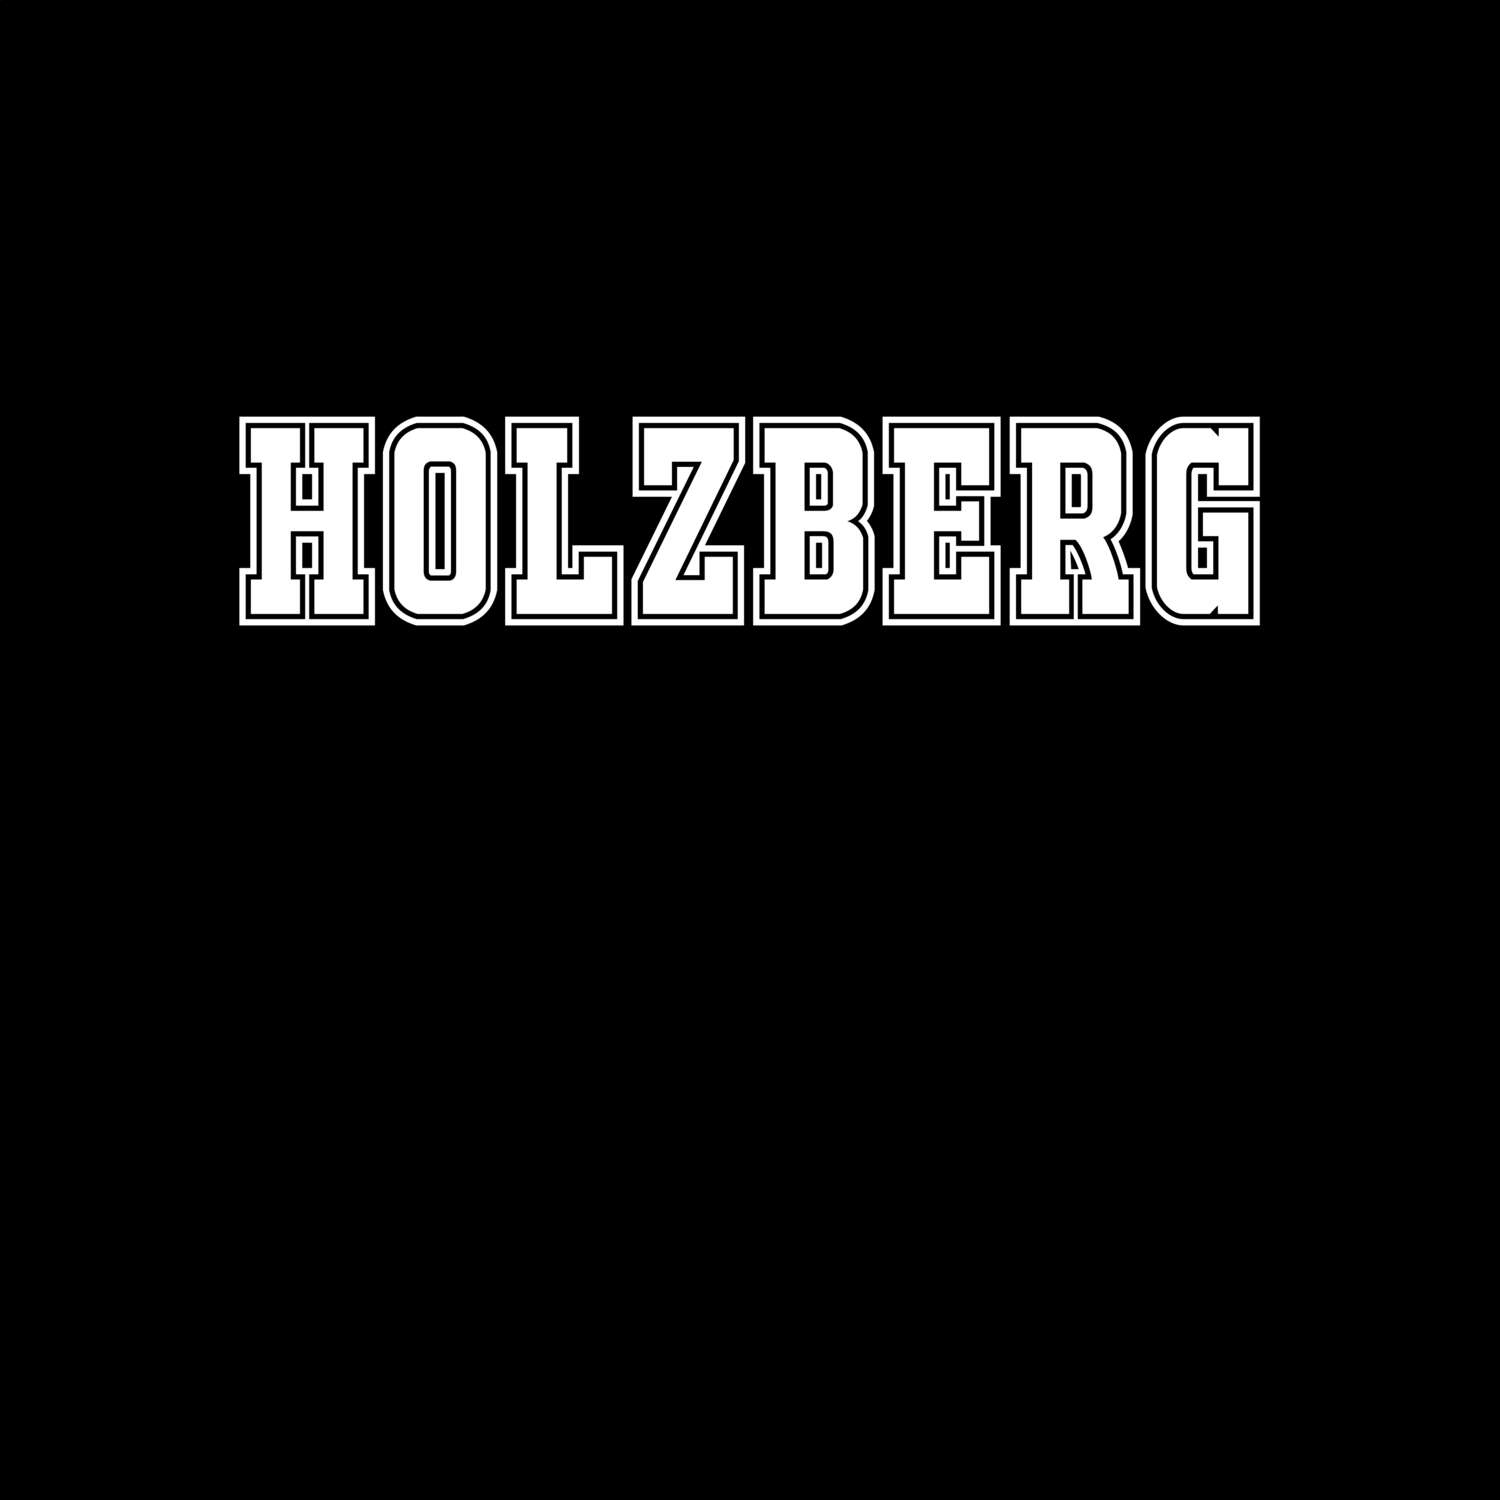 Holzberg T-Shirt »Classic«